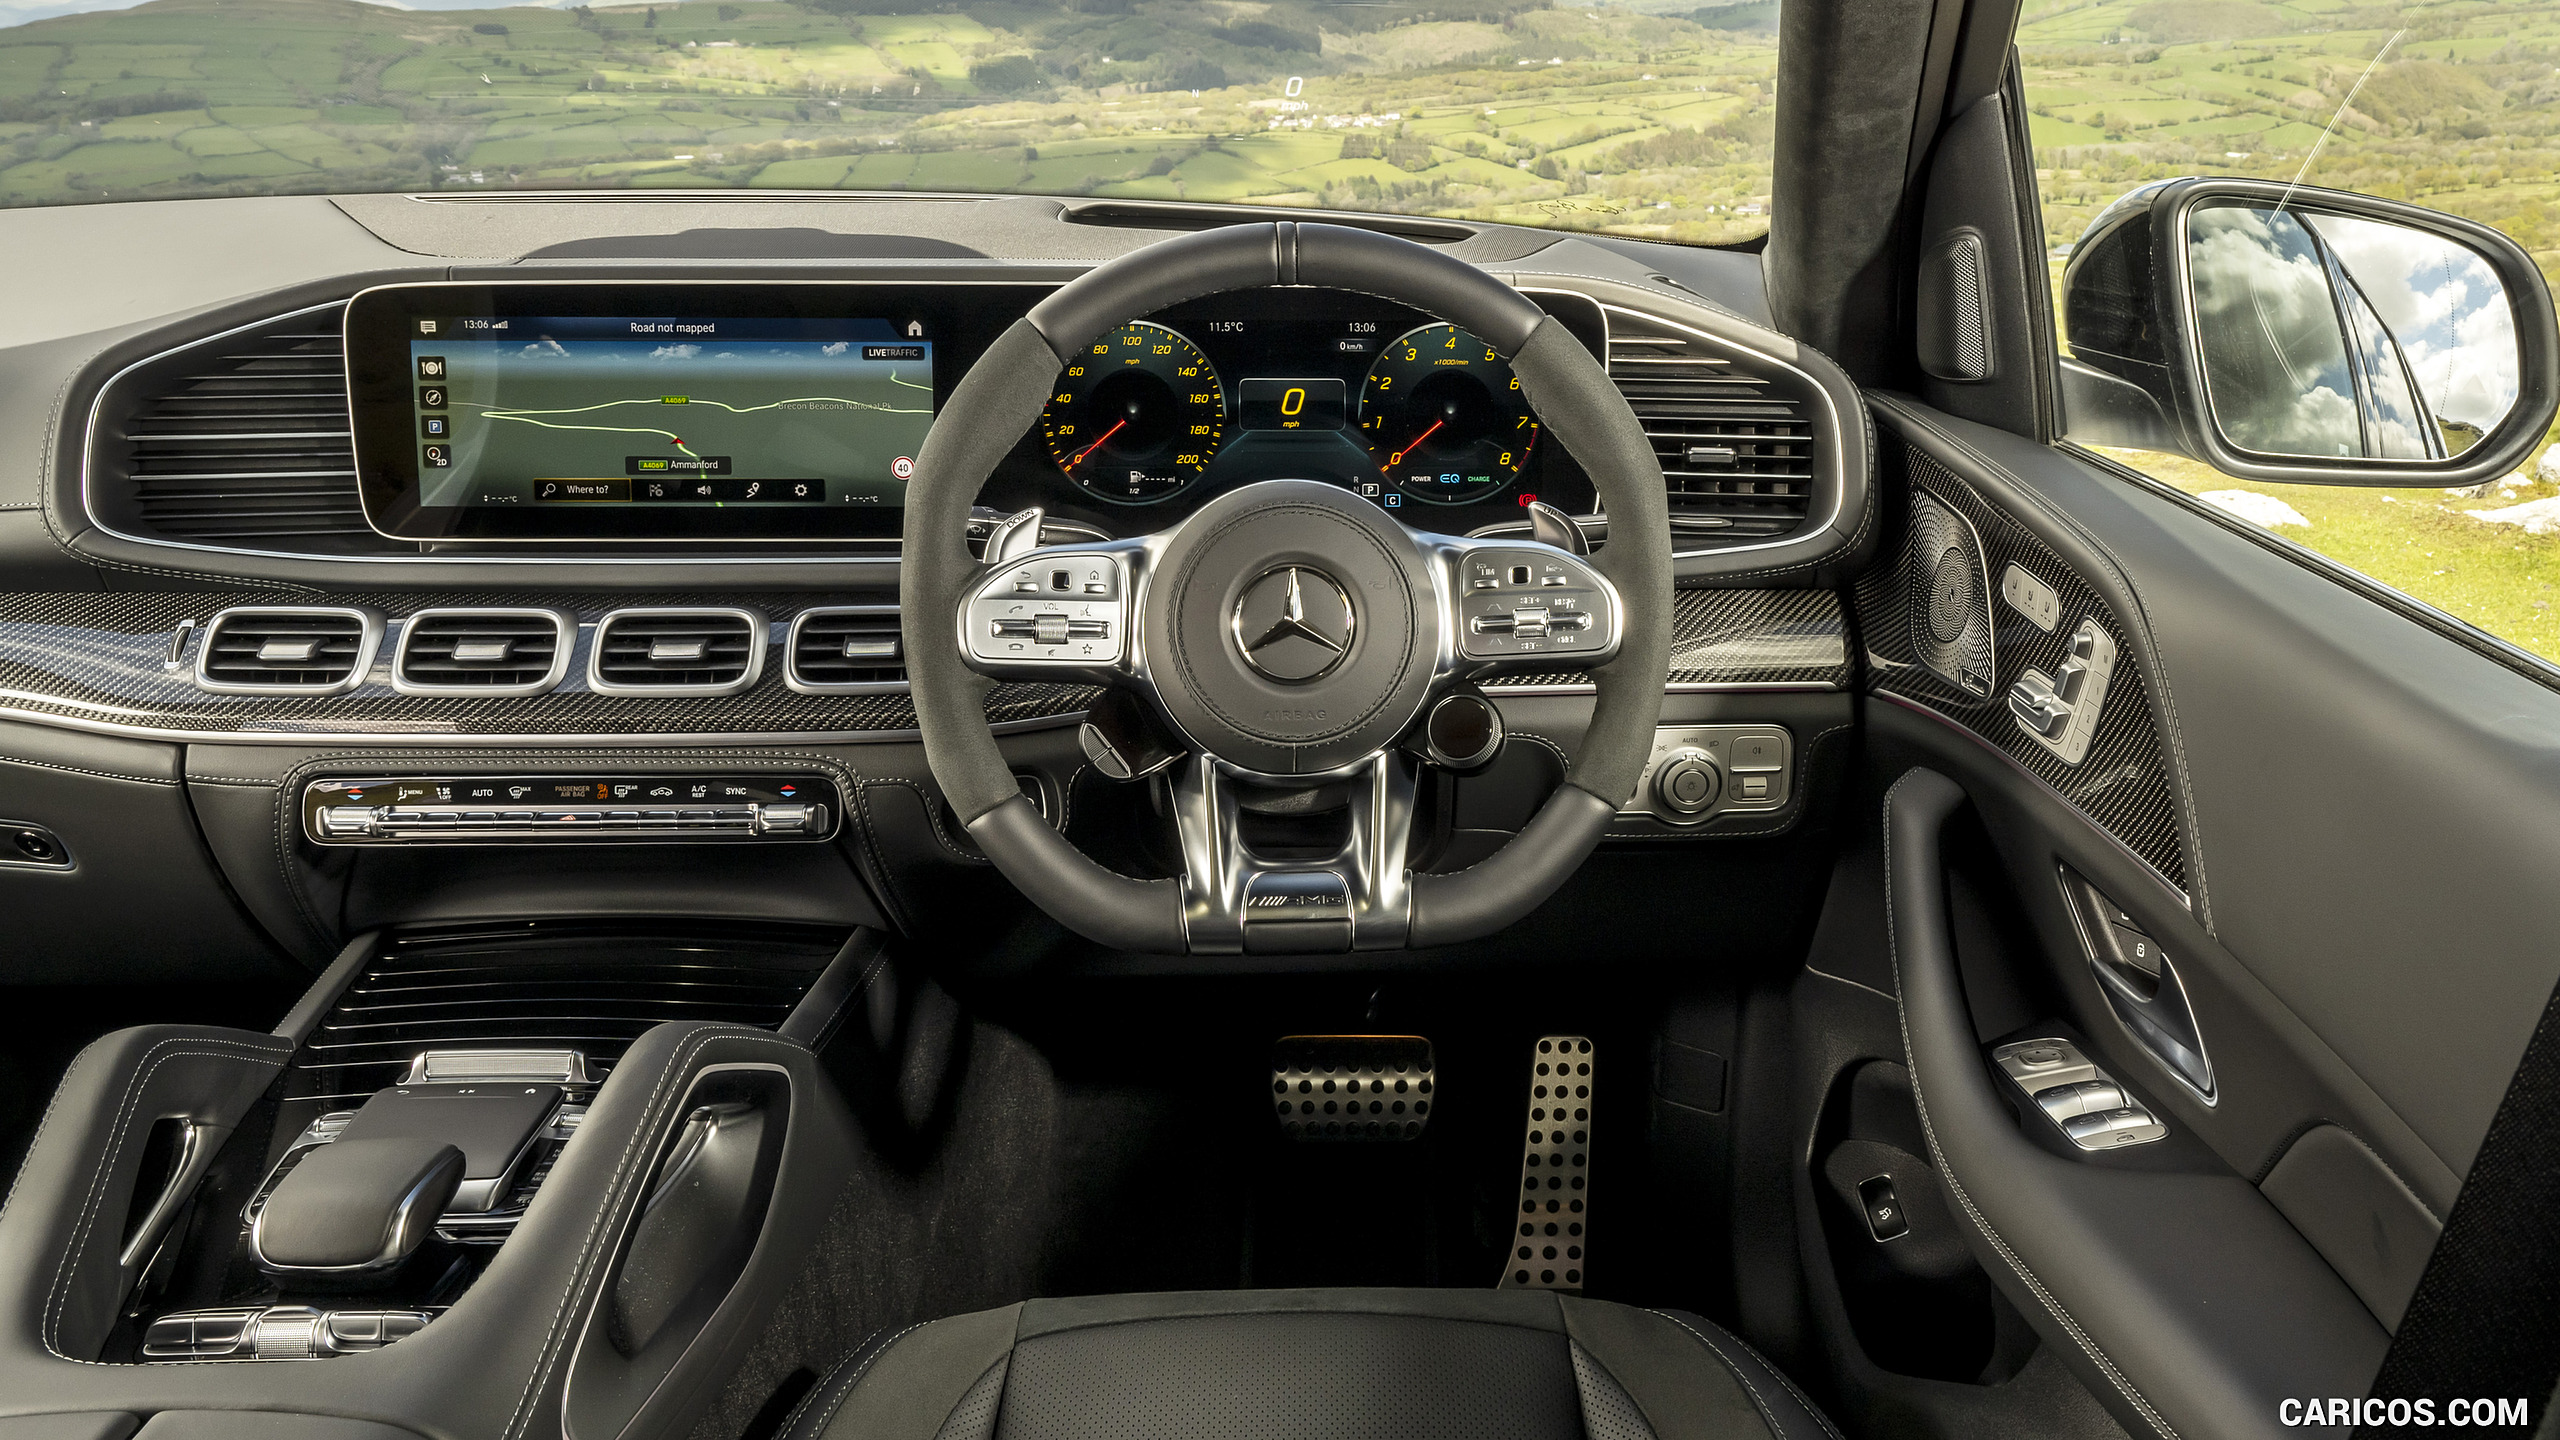 2021 Mercedes-AMG GLE 63 S 4MATIC (UK-Spec) - Interior, Cockpit, #165 of 187